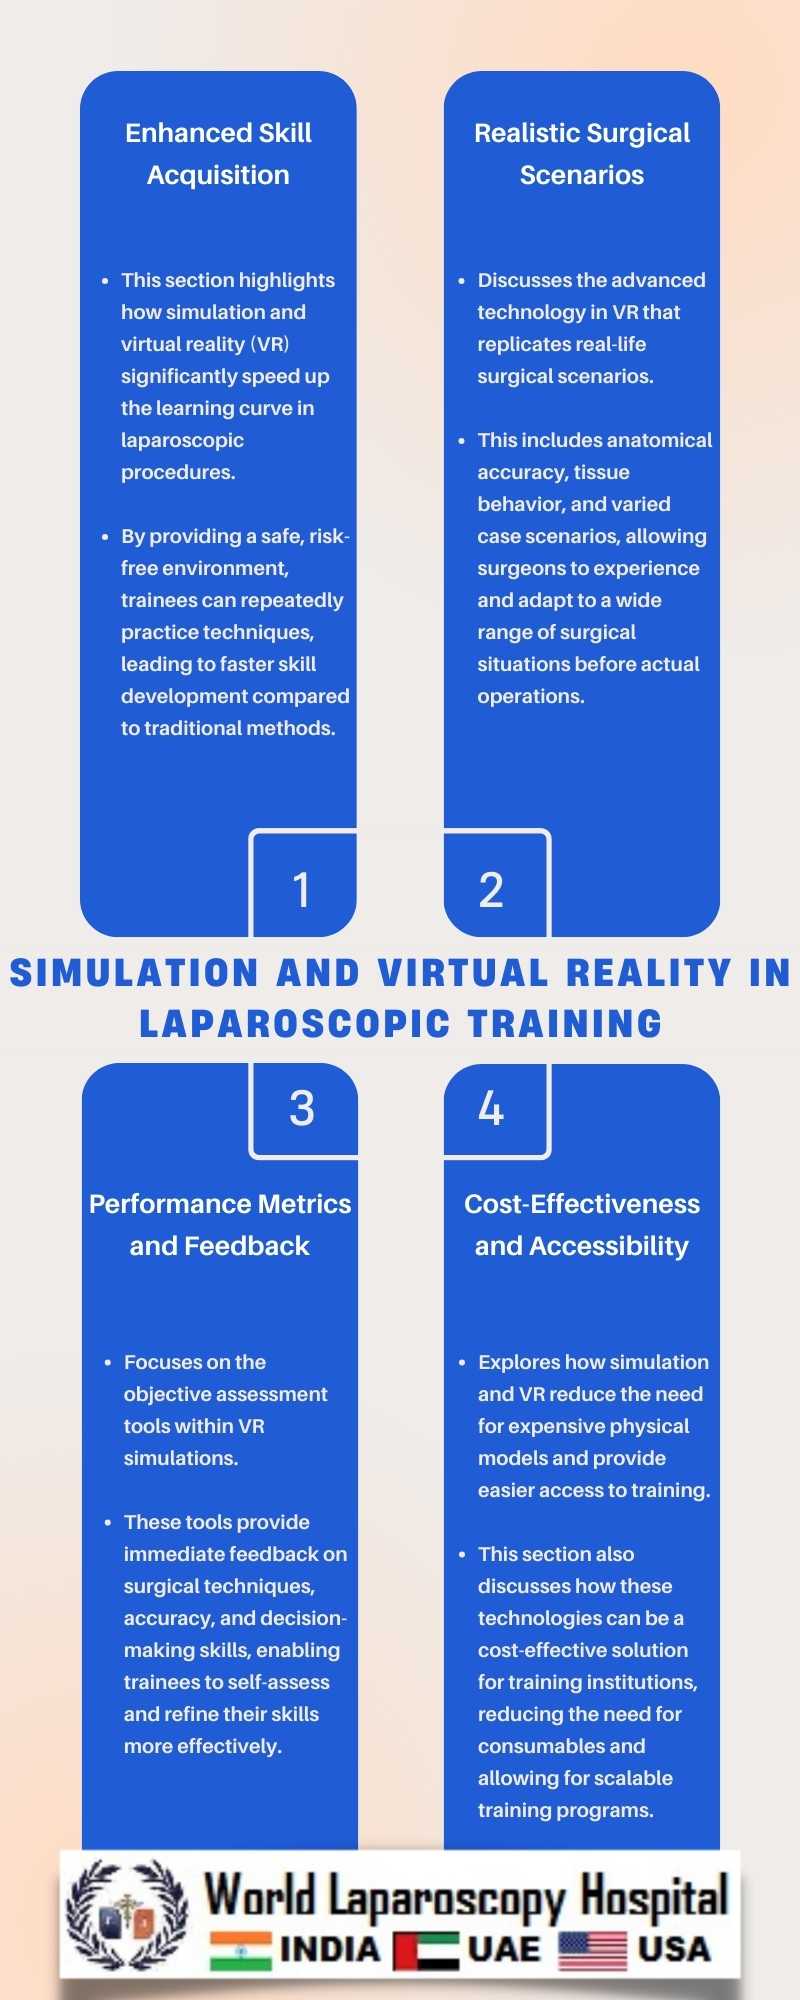 Simulation and Virtual Reality in Laparoscopic Training